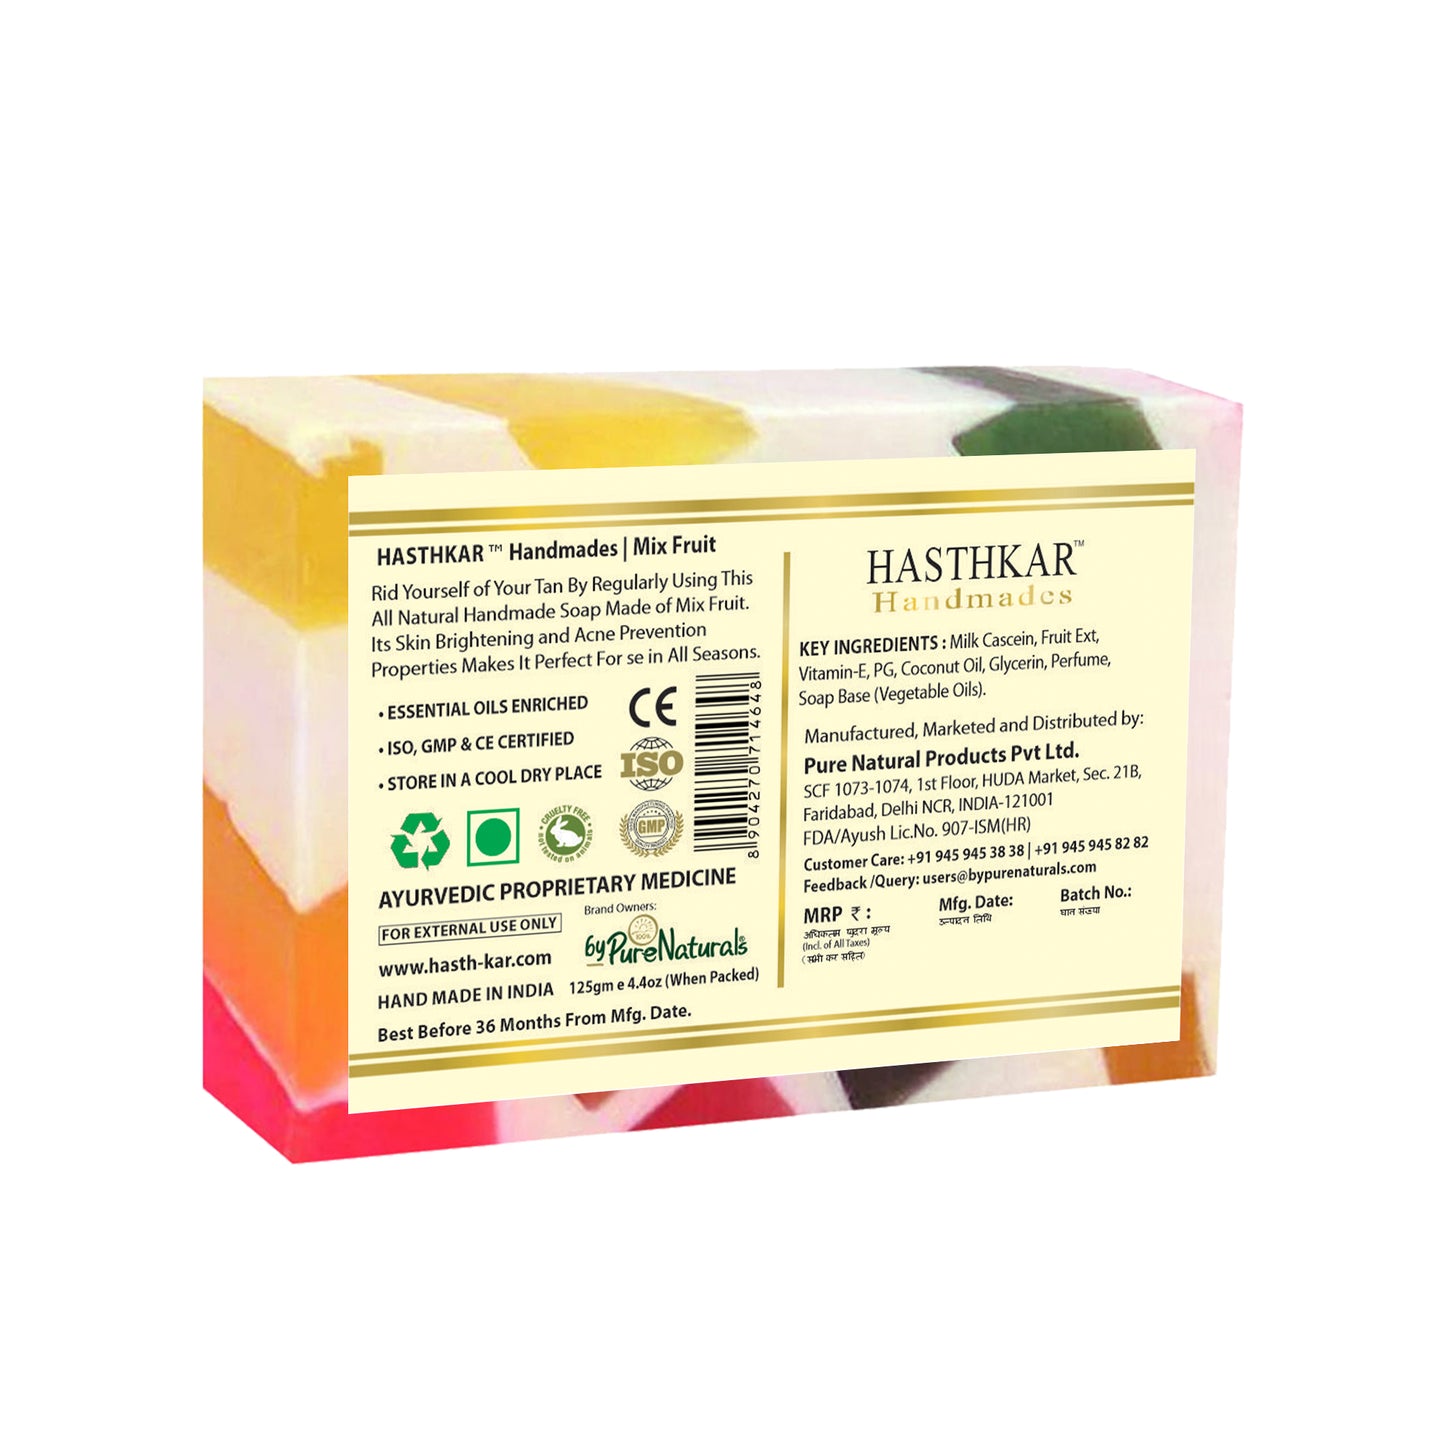 Hasthkar Handmades Glycerine Mix fruit Soap 125gm Pack of 6